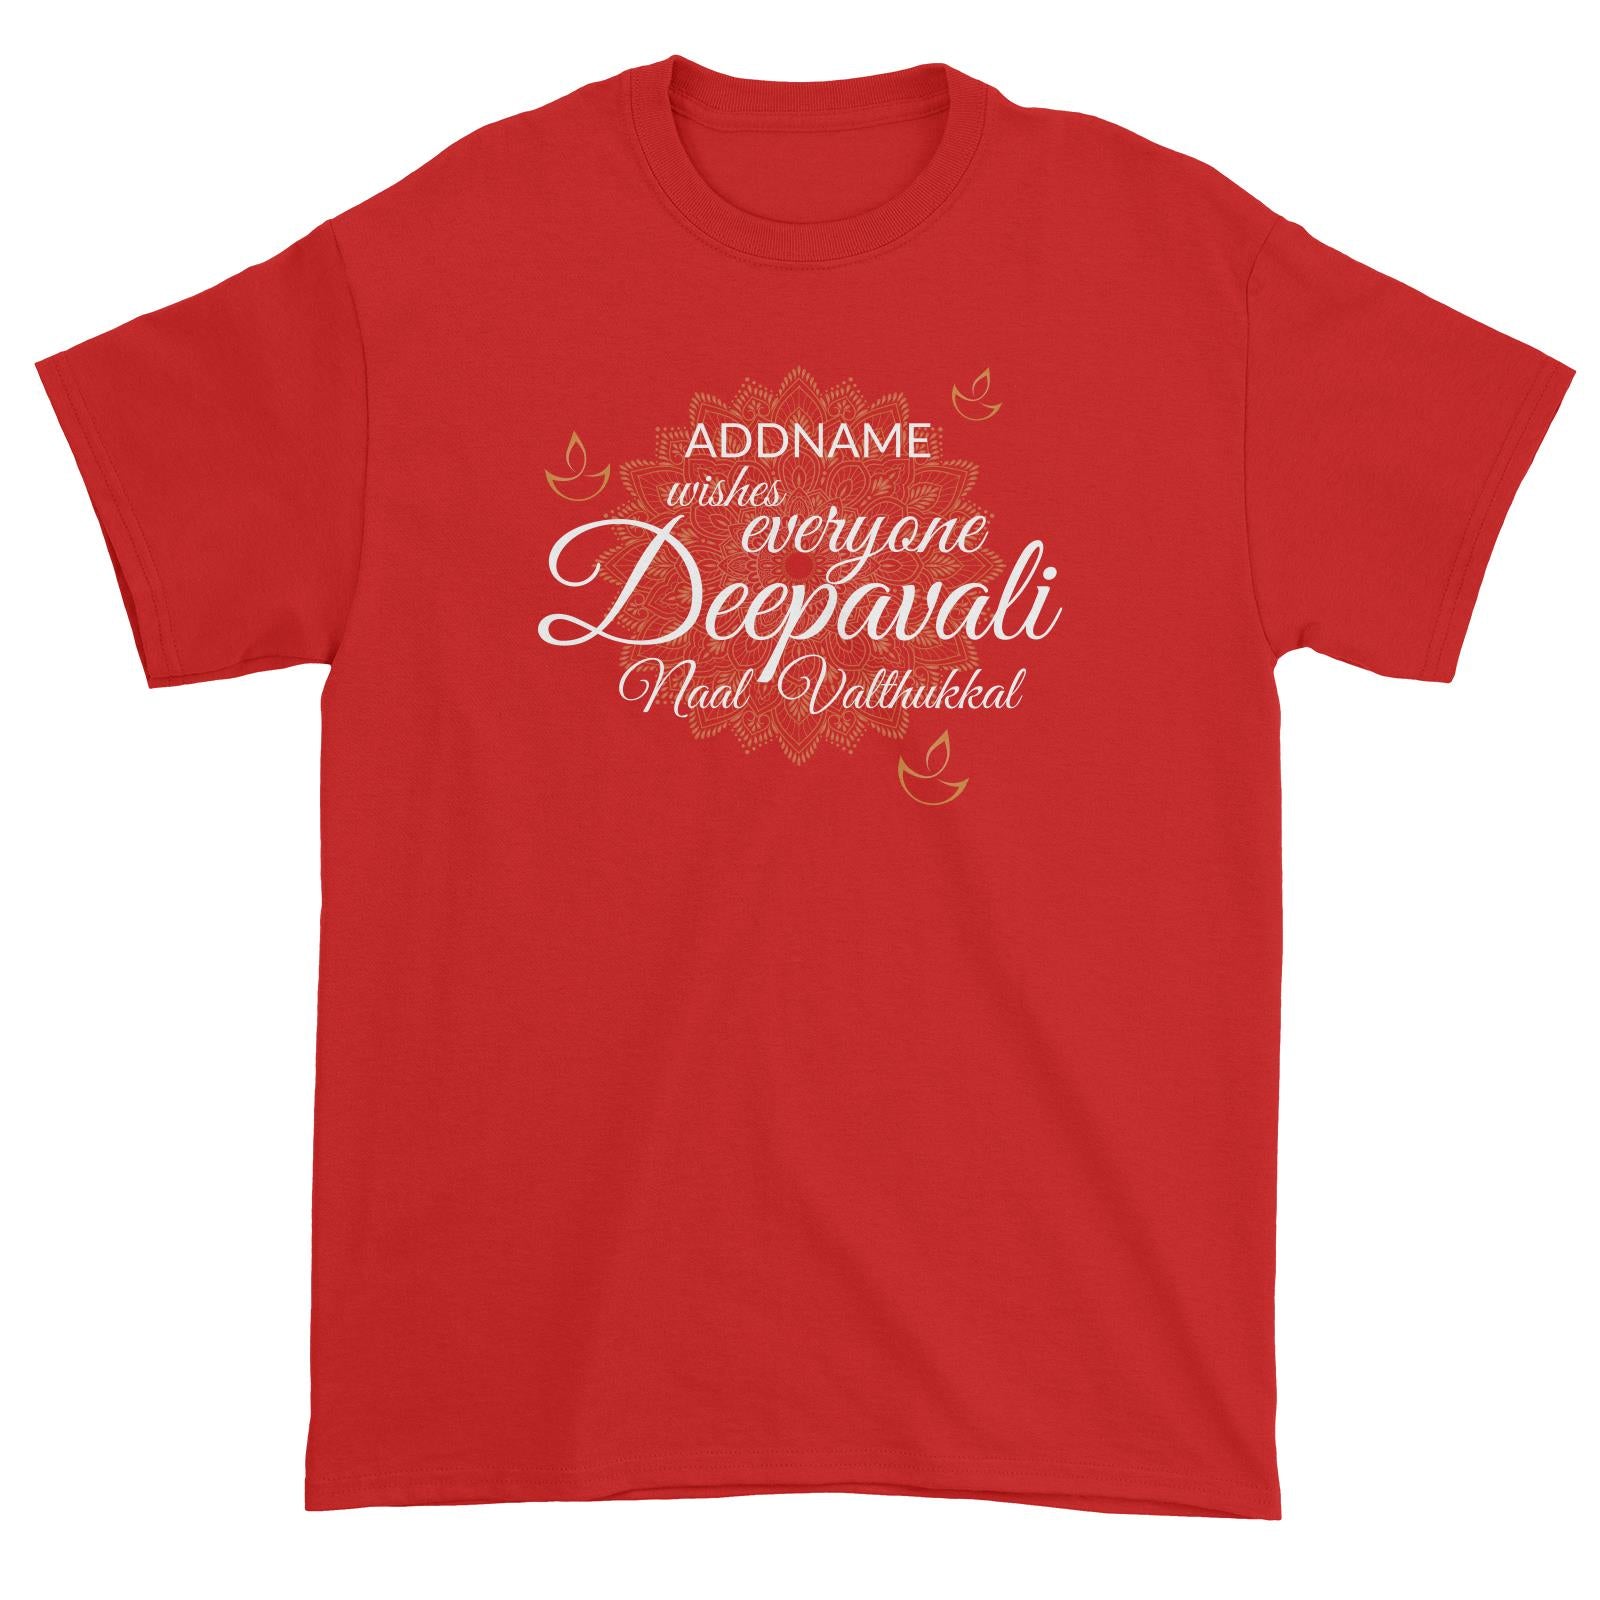 Addname Wishes Everyone Deepavali with Mandala Unisex T-Shirt